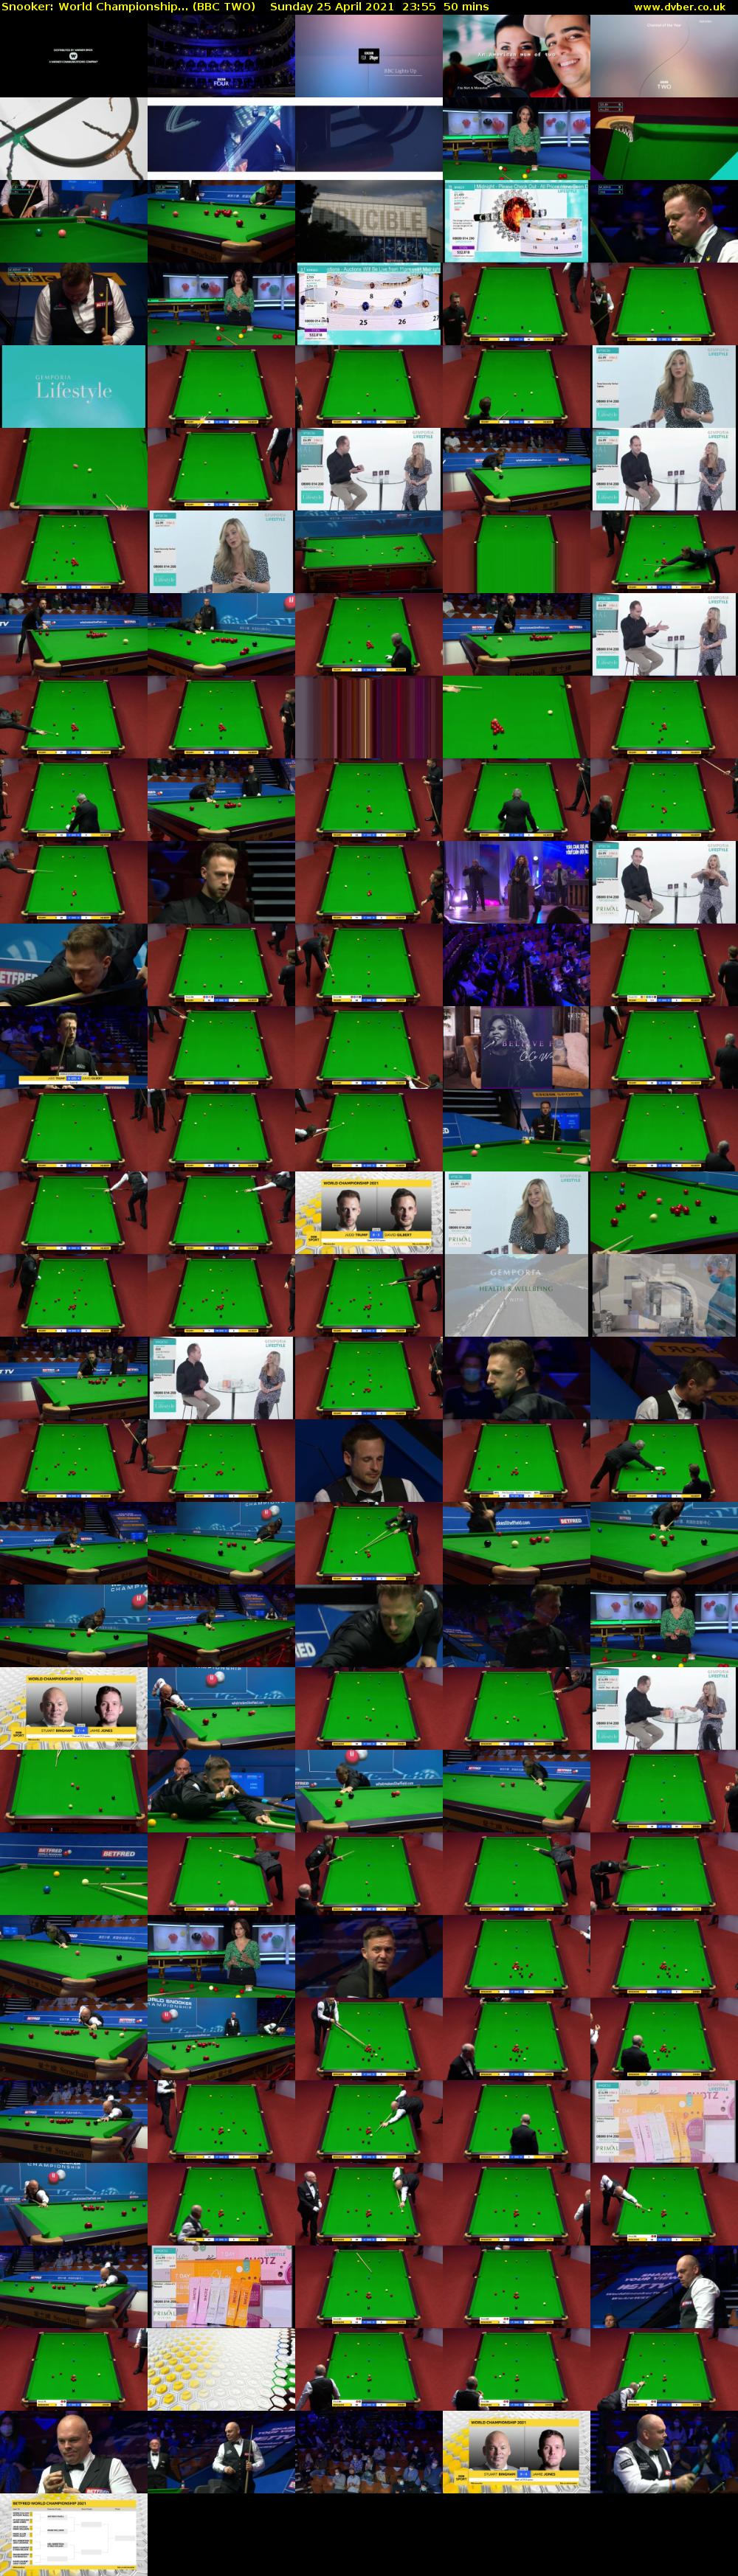 Snooker: World Championship... (BBC TWO) Sunday 25 April 2021 23:55 - 00:45